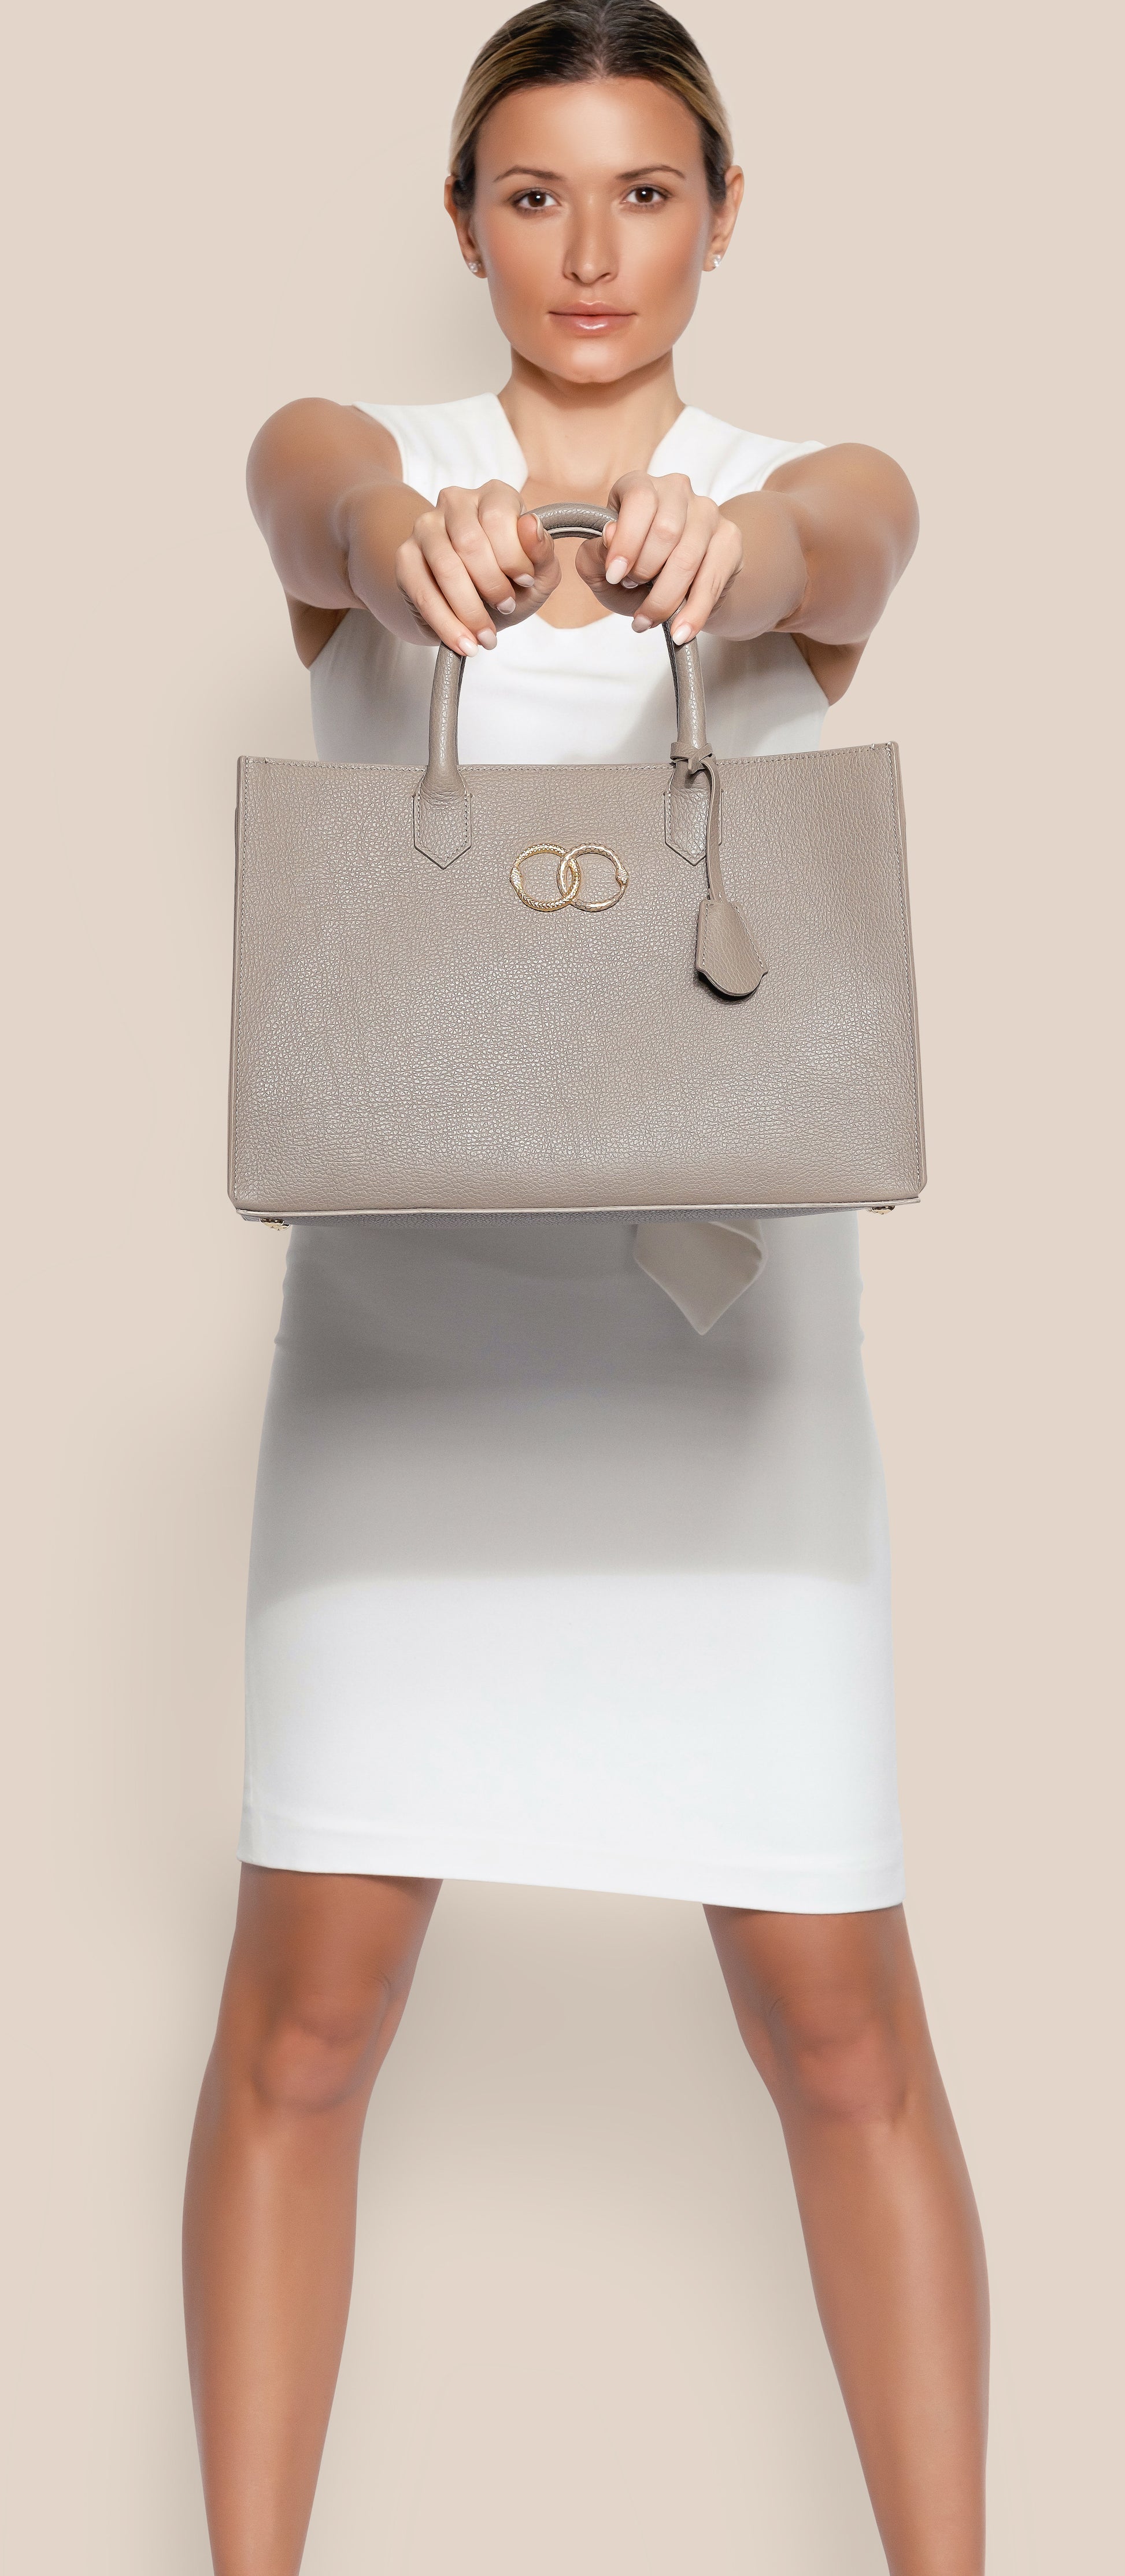 Ouroboros taupe genuine leather women's tote bag